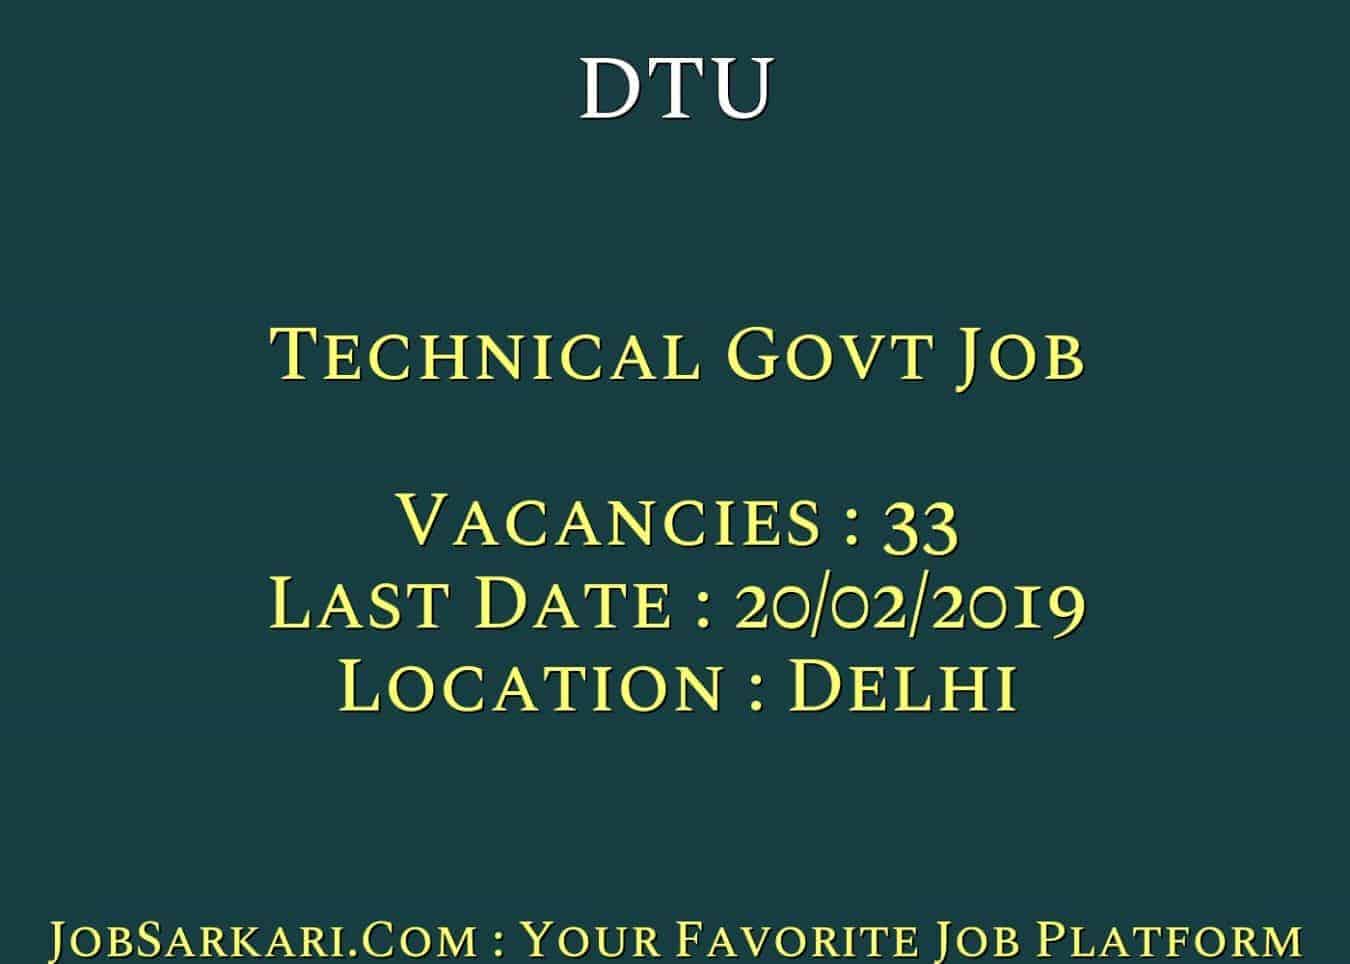 DTU Recruitment 2019 For Technical Govt Job